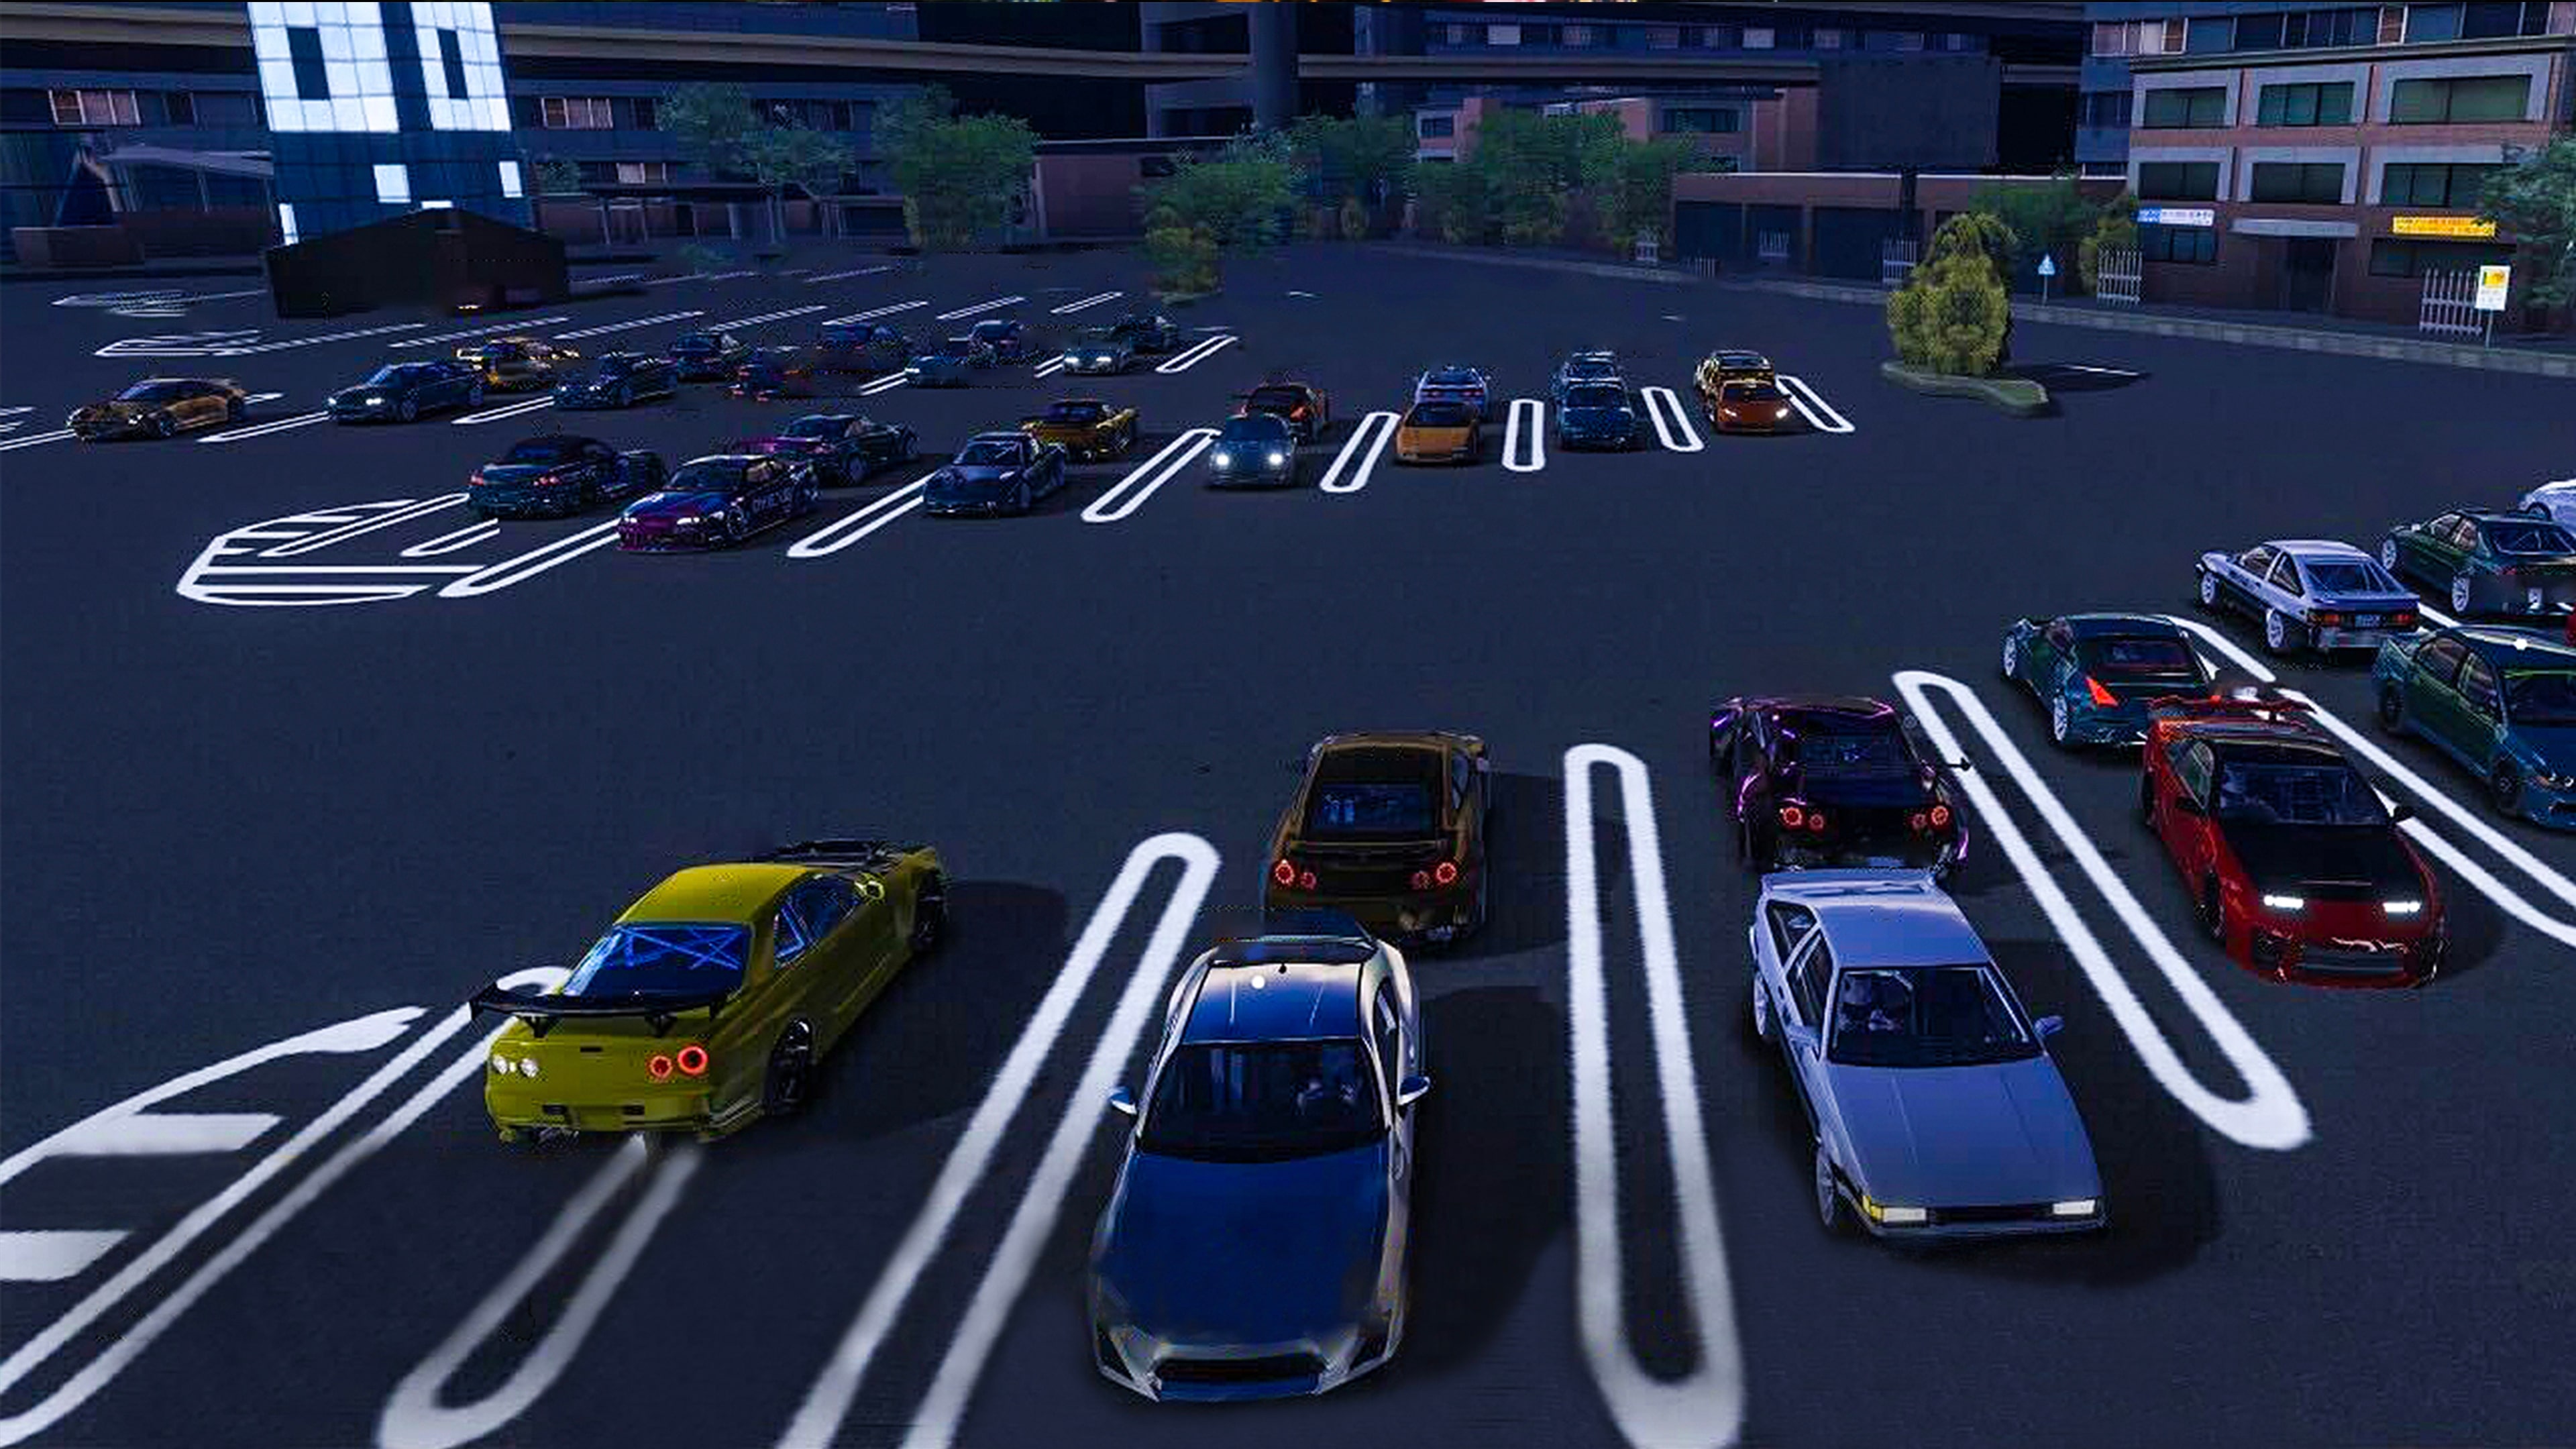 Hashiriya Drifter-Car Racing,Drift,Drag Online Multiplayer Simulator Games  Driving Sim.